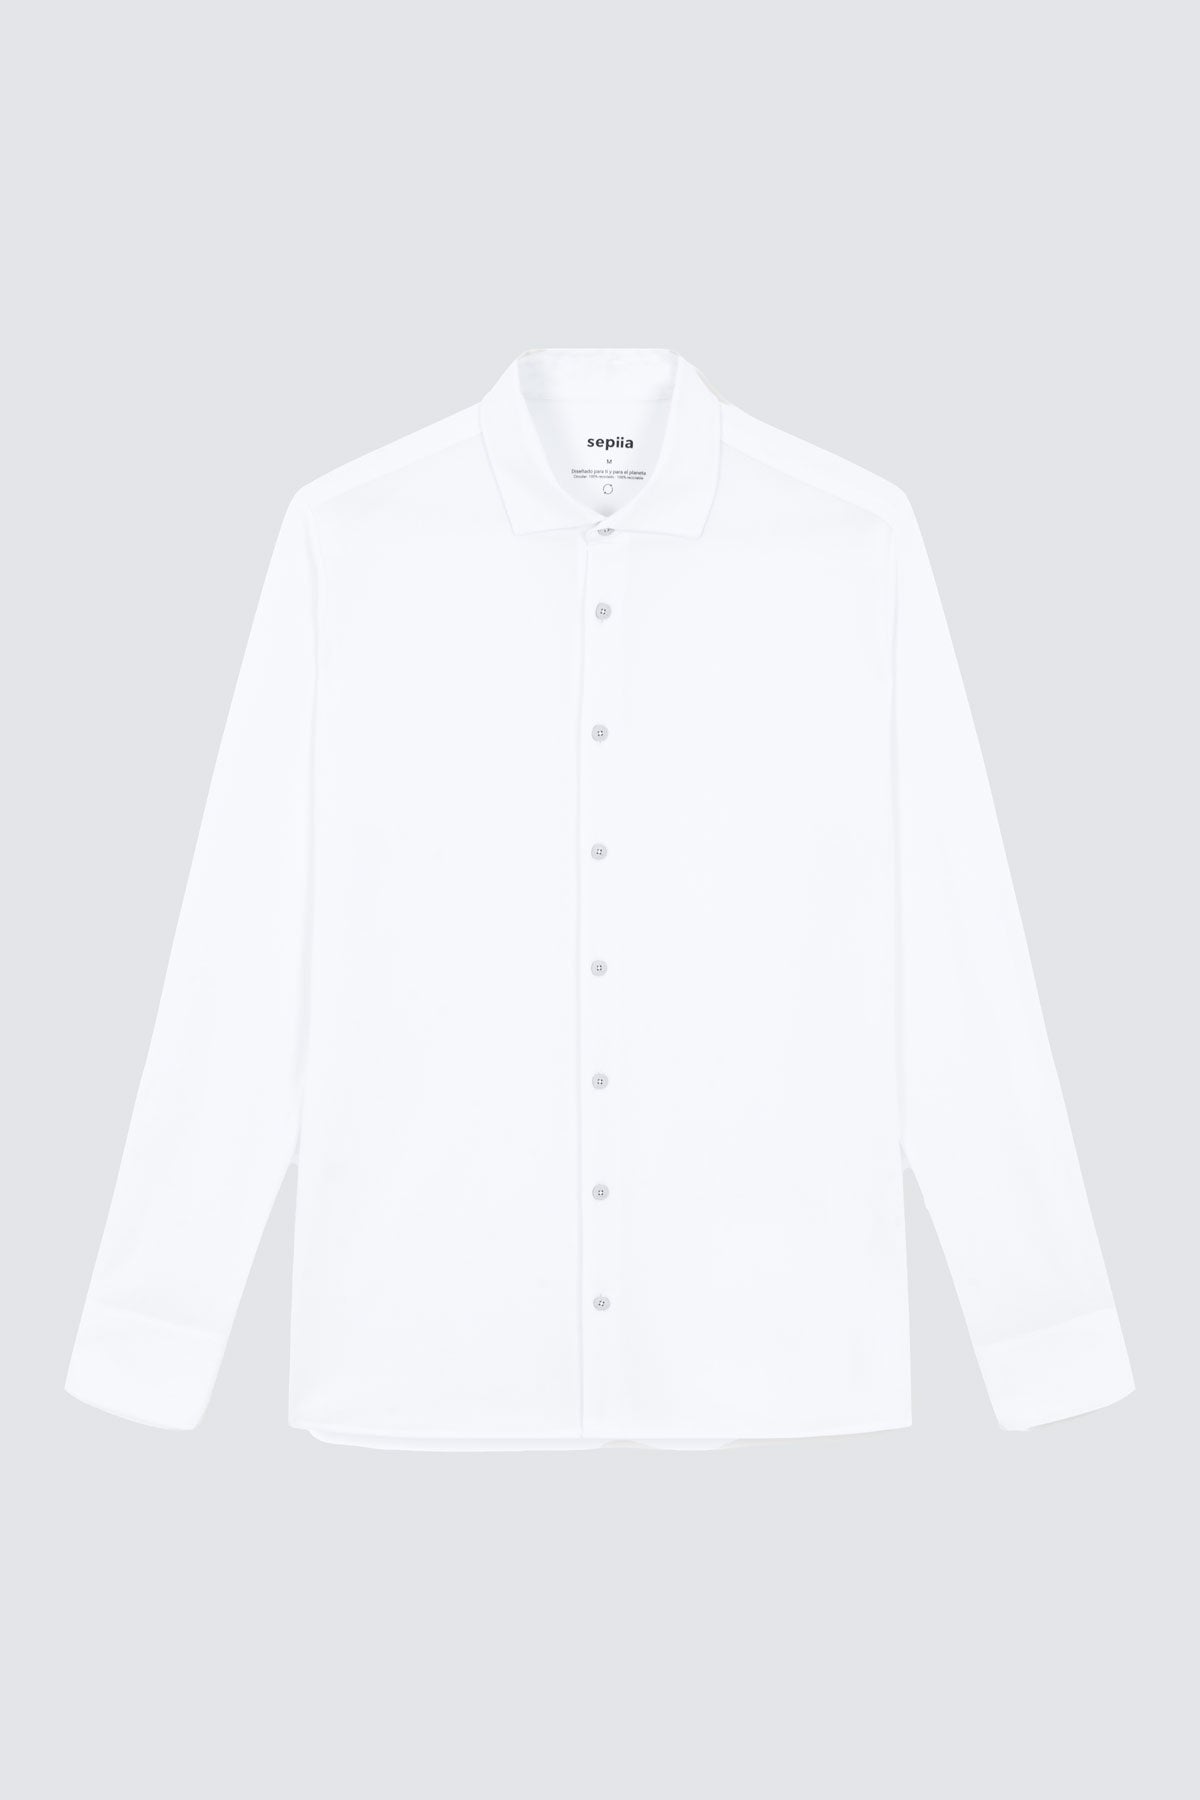 Camisa de vestir blanca de manga larga regular para hombre Sepiia: Camisa de vestir blanca de manga larga regular para hombre sin arrugas, antimanchas, perfecta para traje o americana. Foto prenda en plano